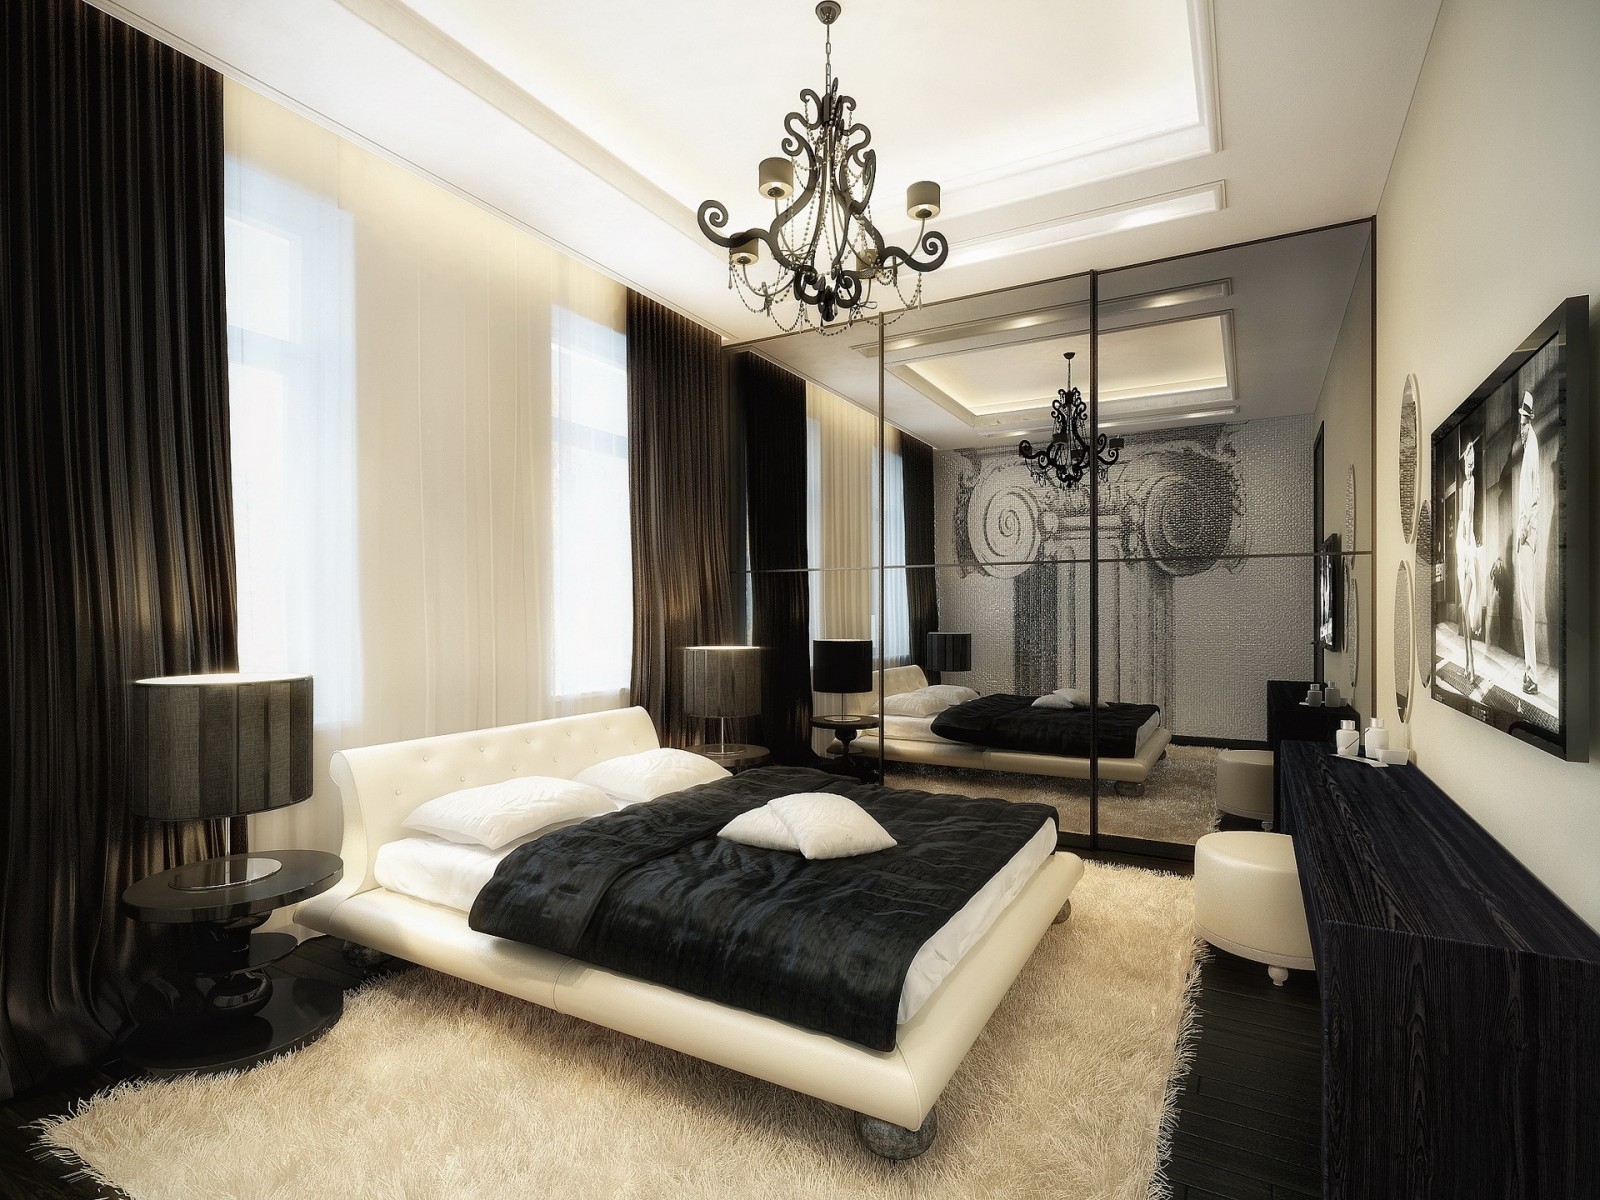 Splendid Bedroom Design for 1600 x 1200 resolution